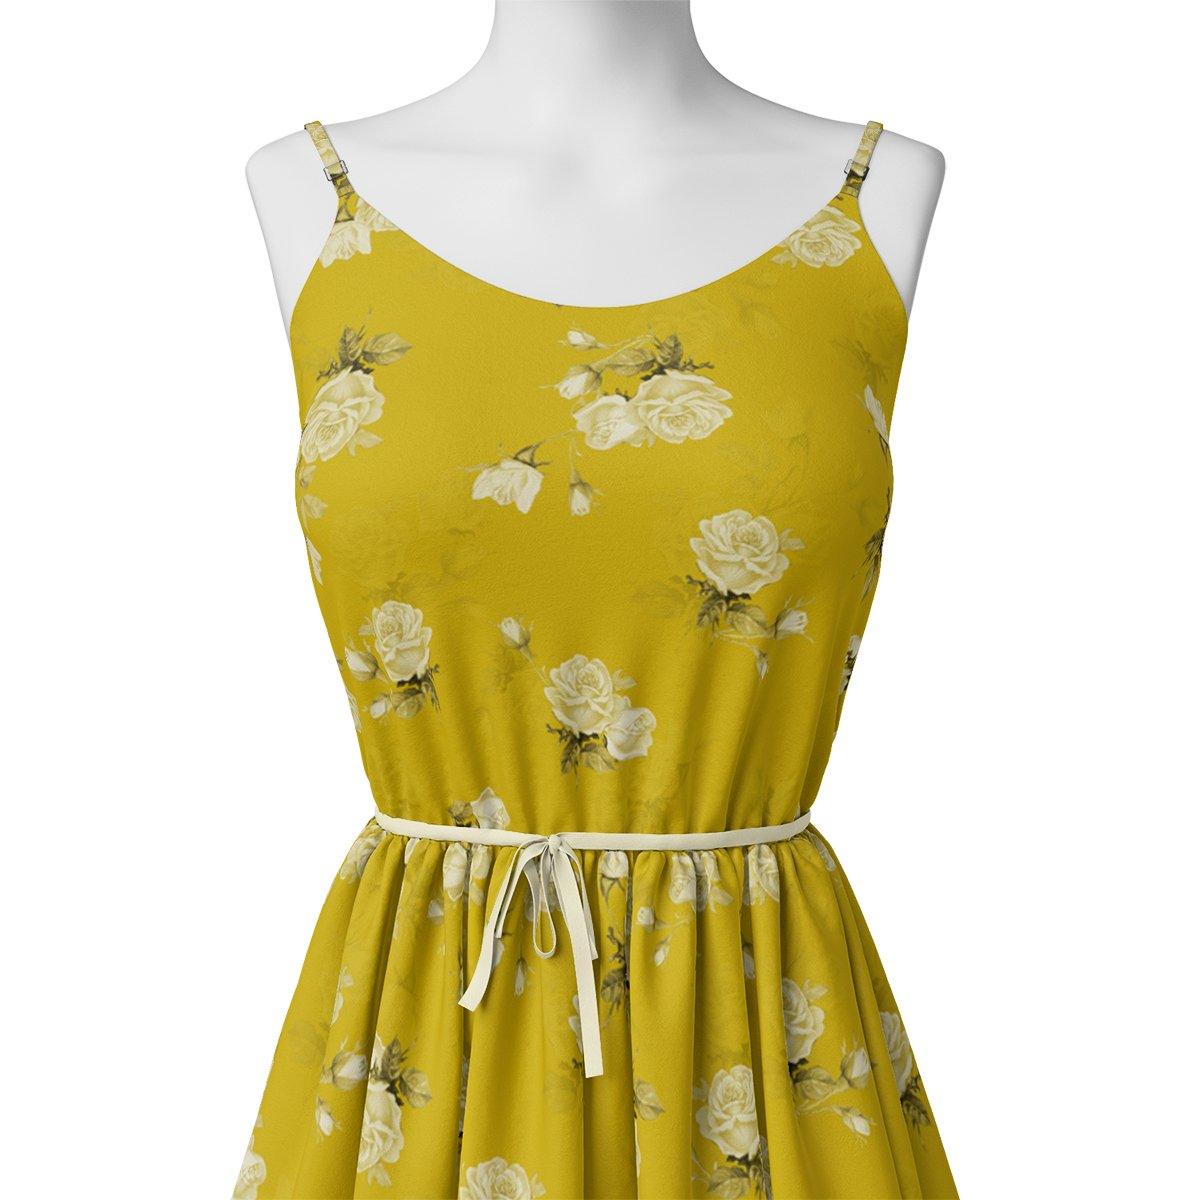 Lemon Yellow Flower Allover Digital Printed Fabric - FAB VOGUE Studio®